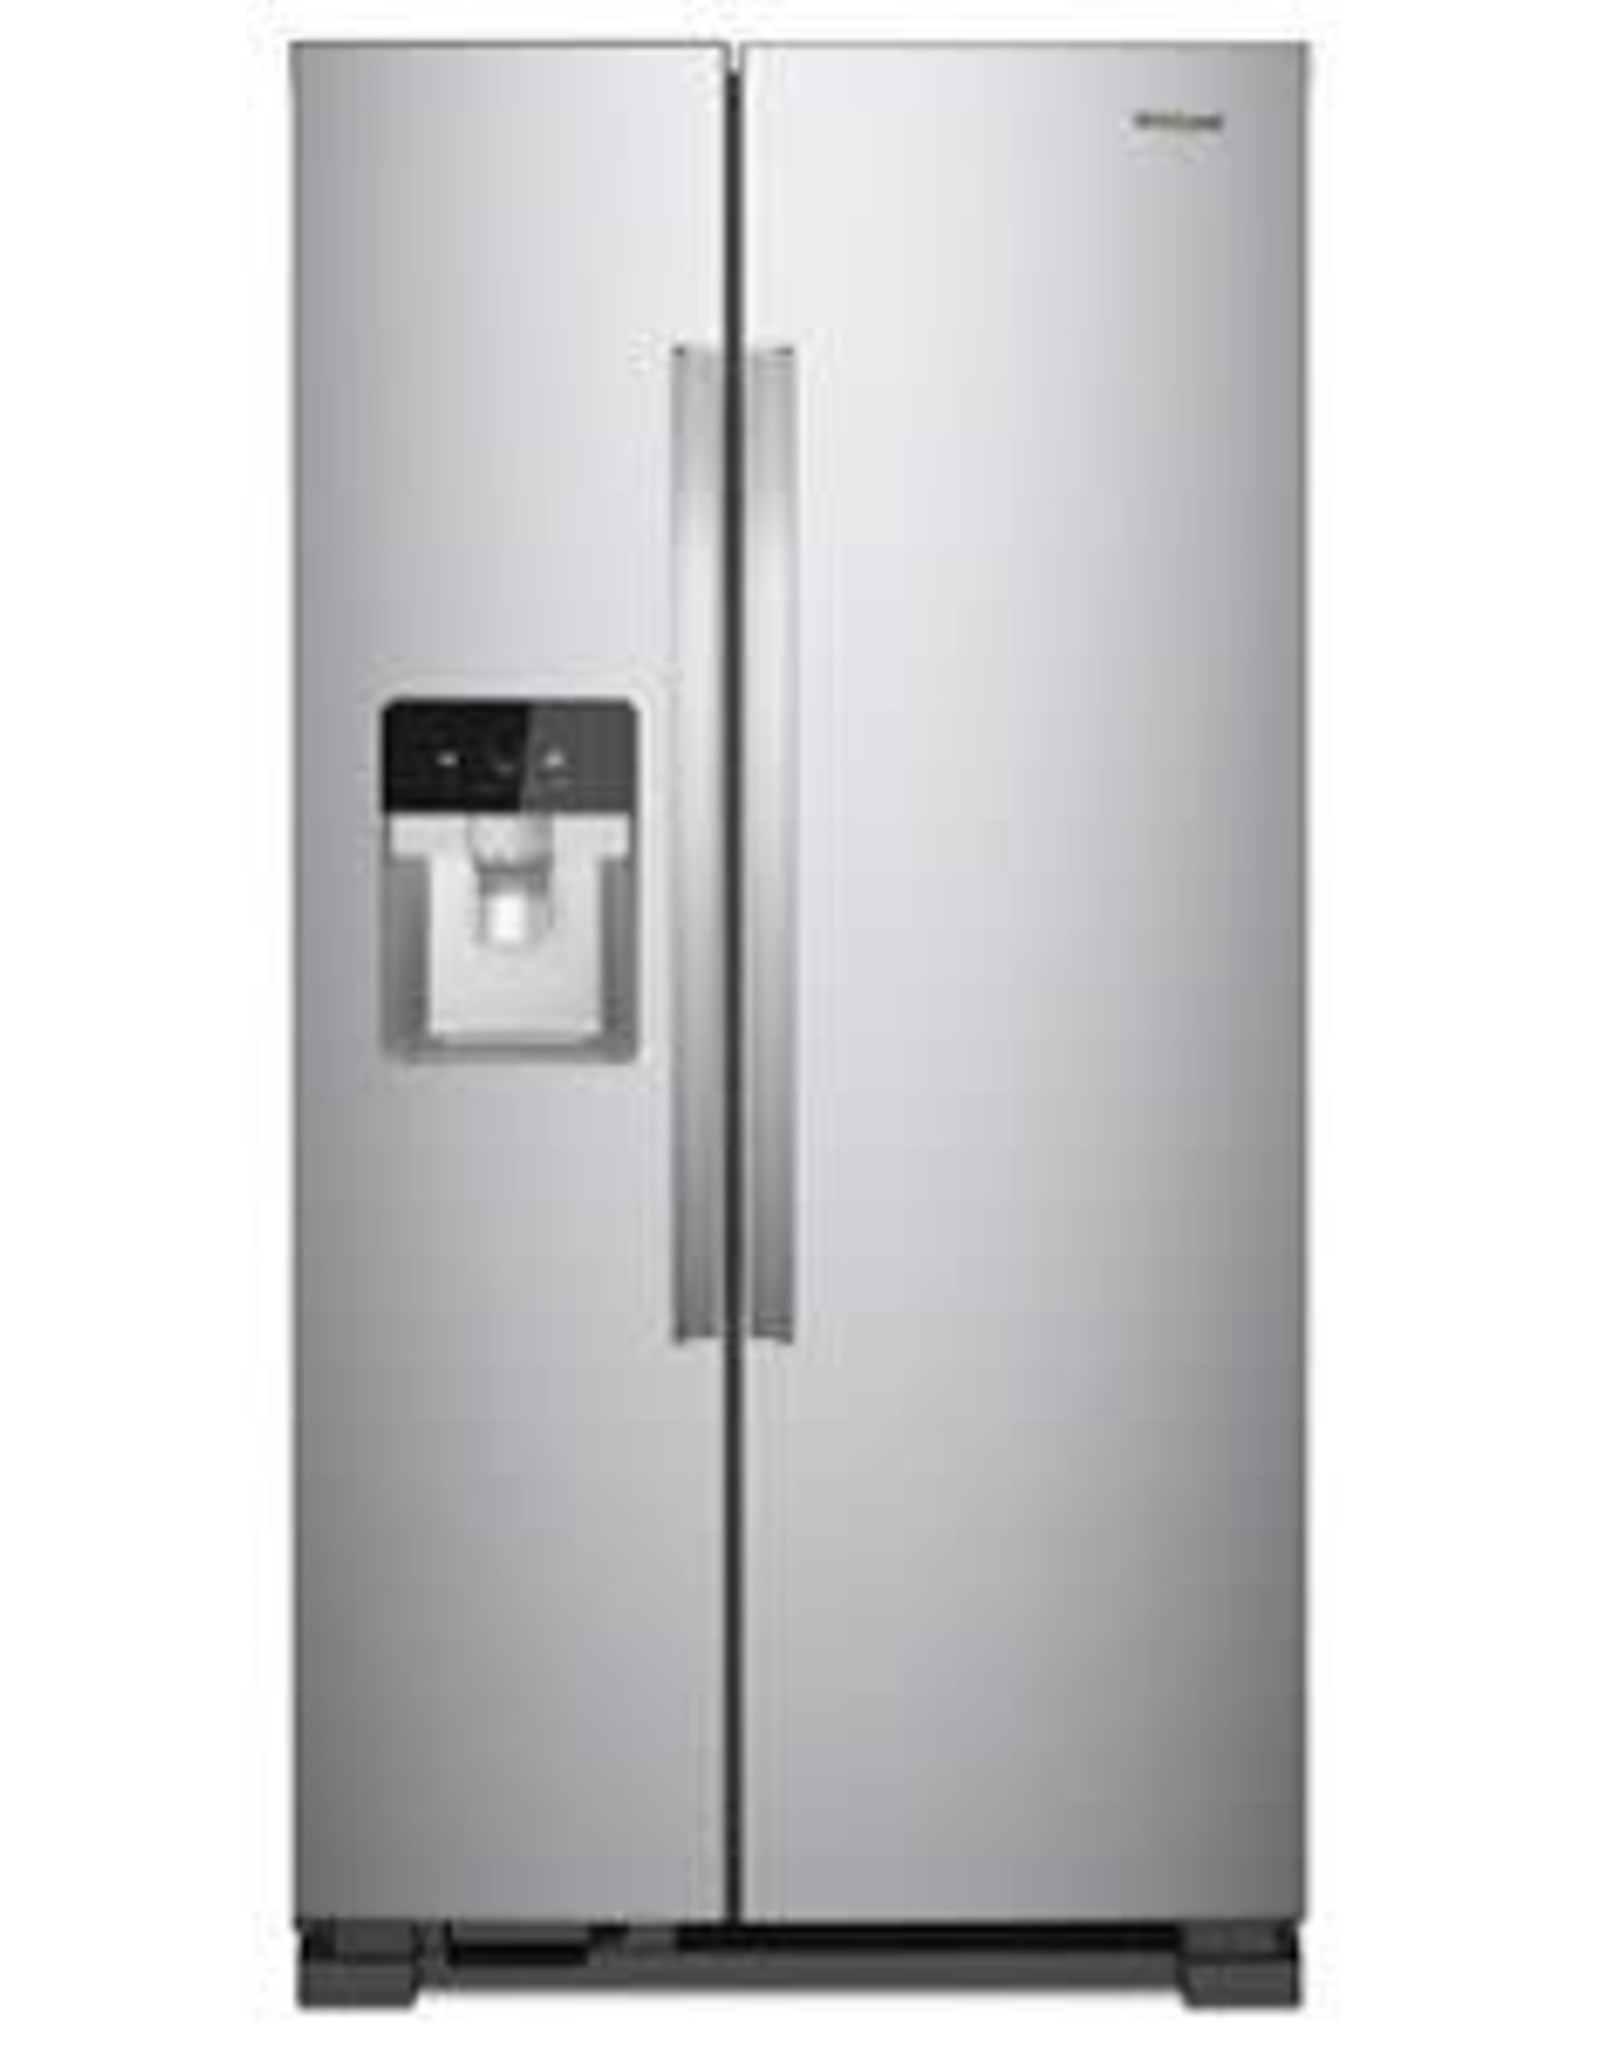 WHIRLPOOL WRS321SDHZ 21 cu. ft. Side by Side Refrigerator in Fingerprint Resistant Stainless Steel